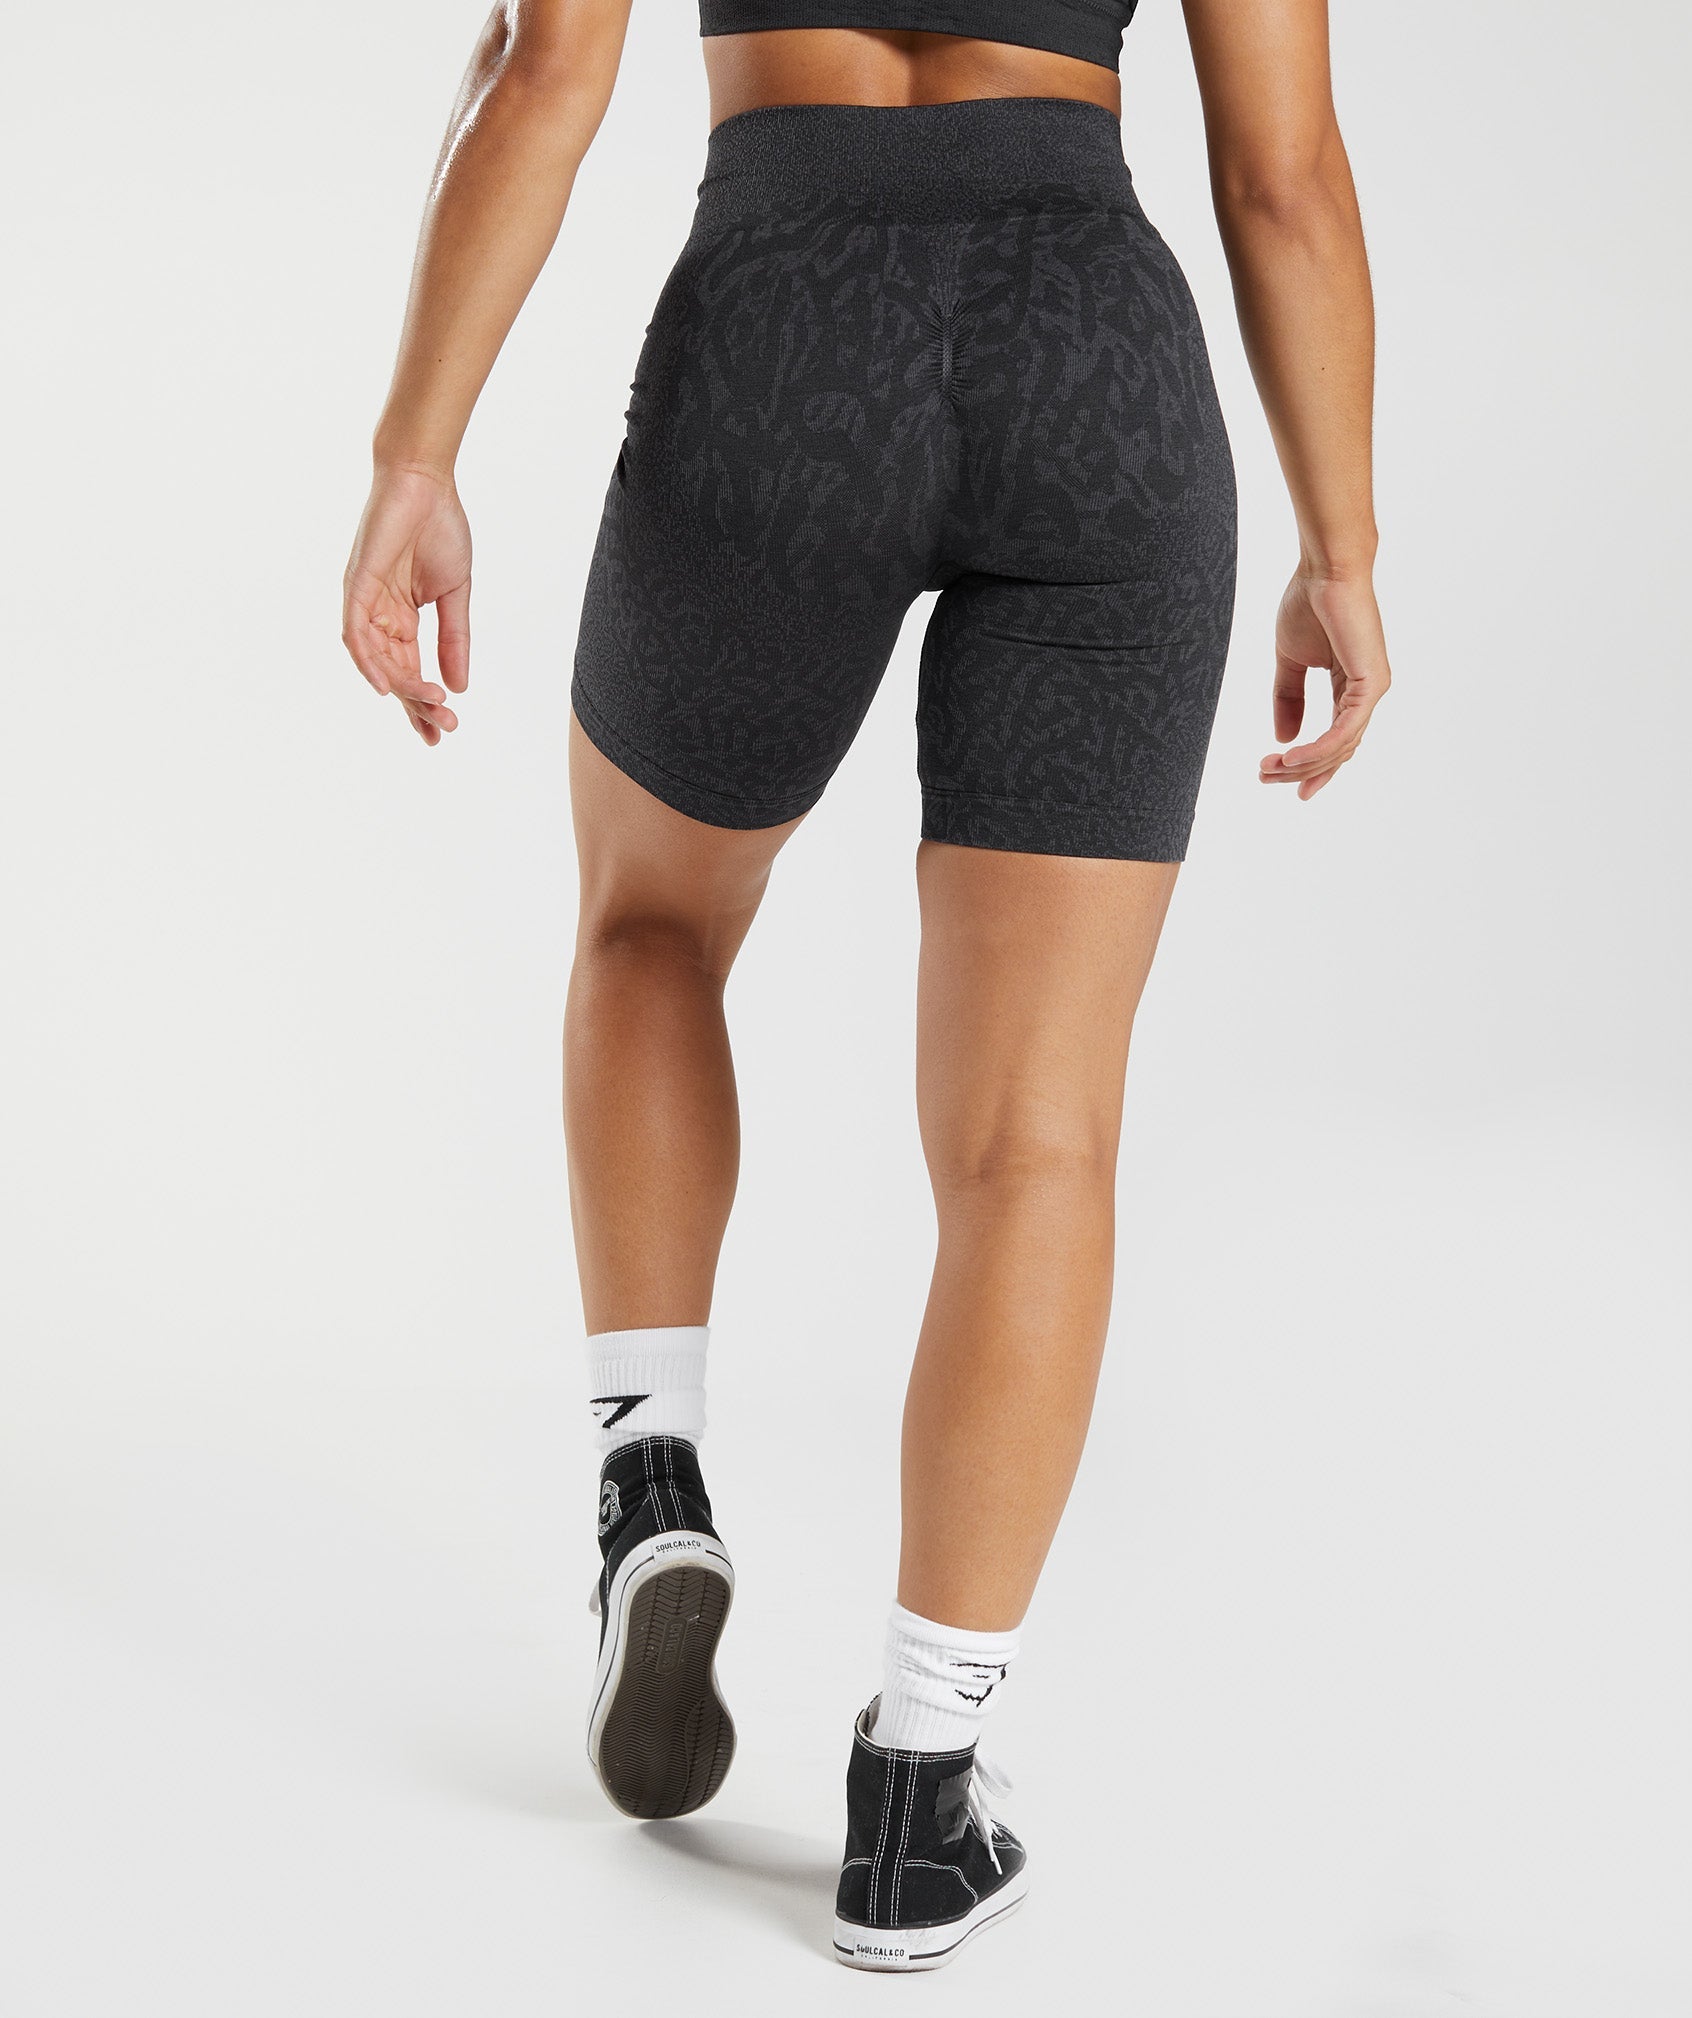 Gymshark Flex cycling shorts size L